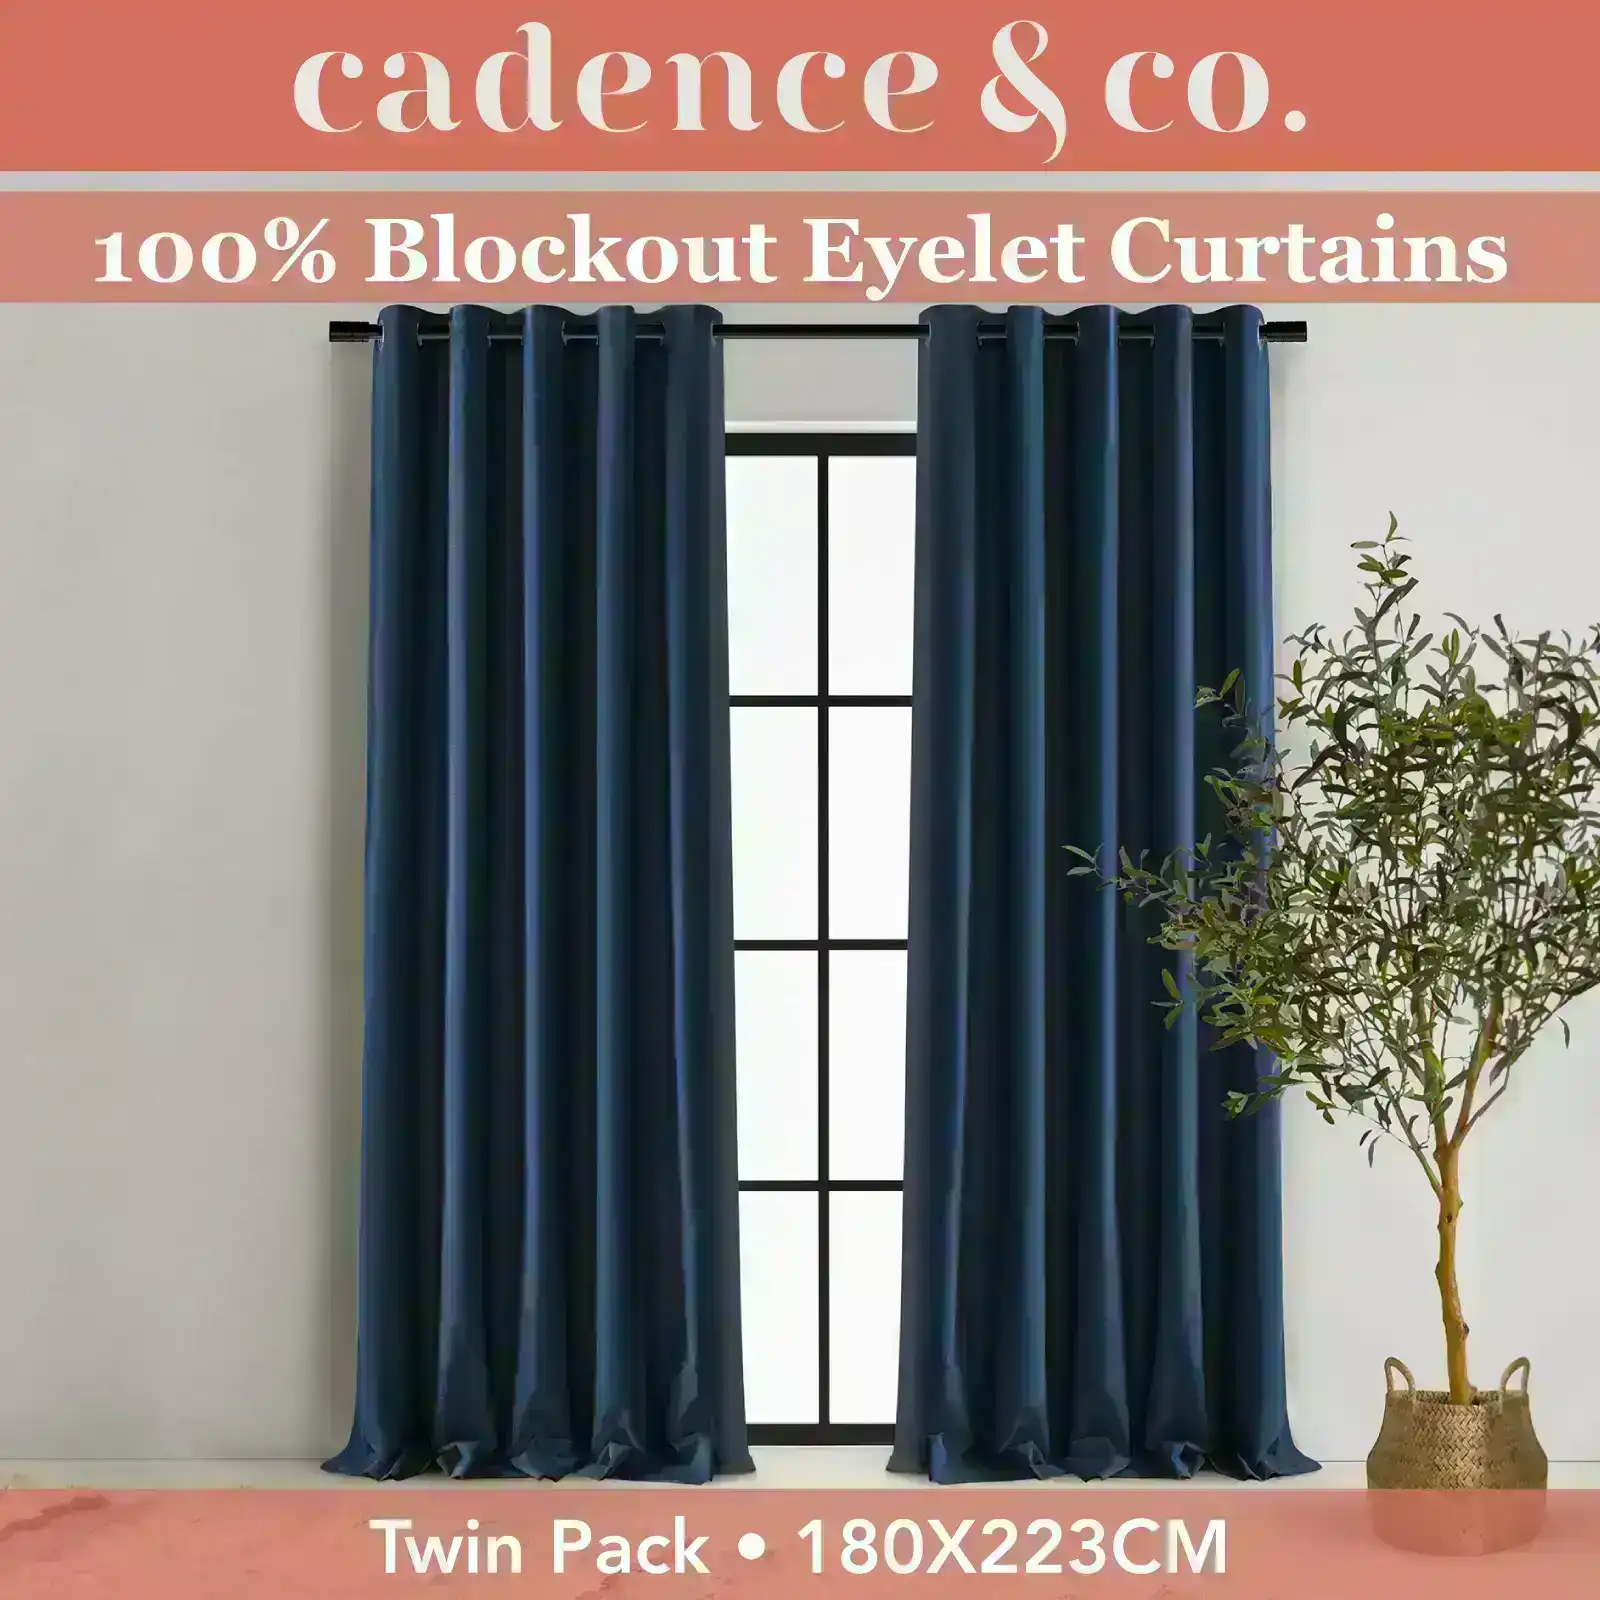 Cadence & Co Byron Matte Velvet 100% Blockout Eyelet Curtains Twin Pack Navy Blue 180x223cm